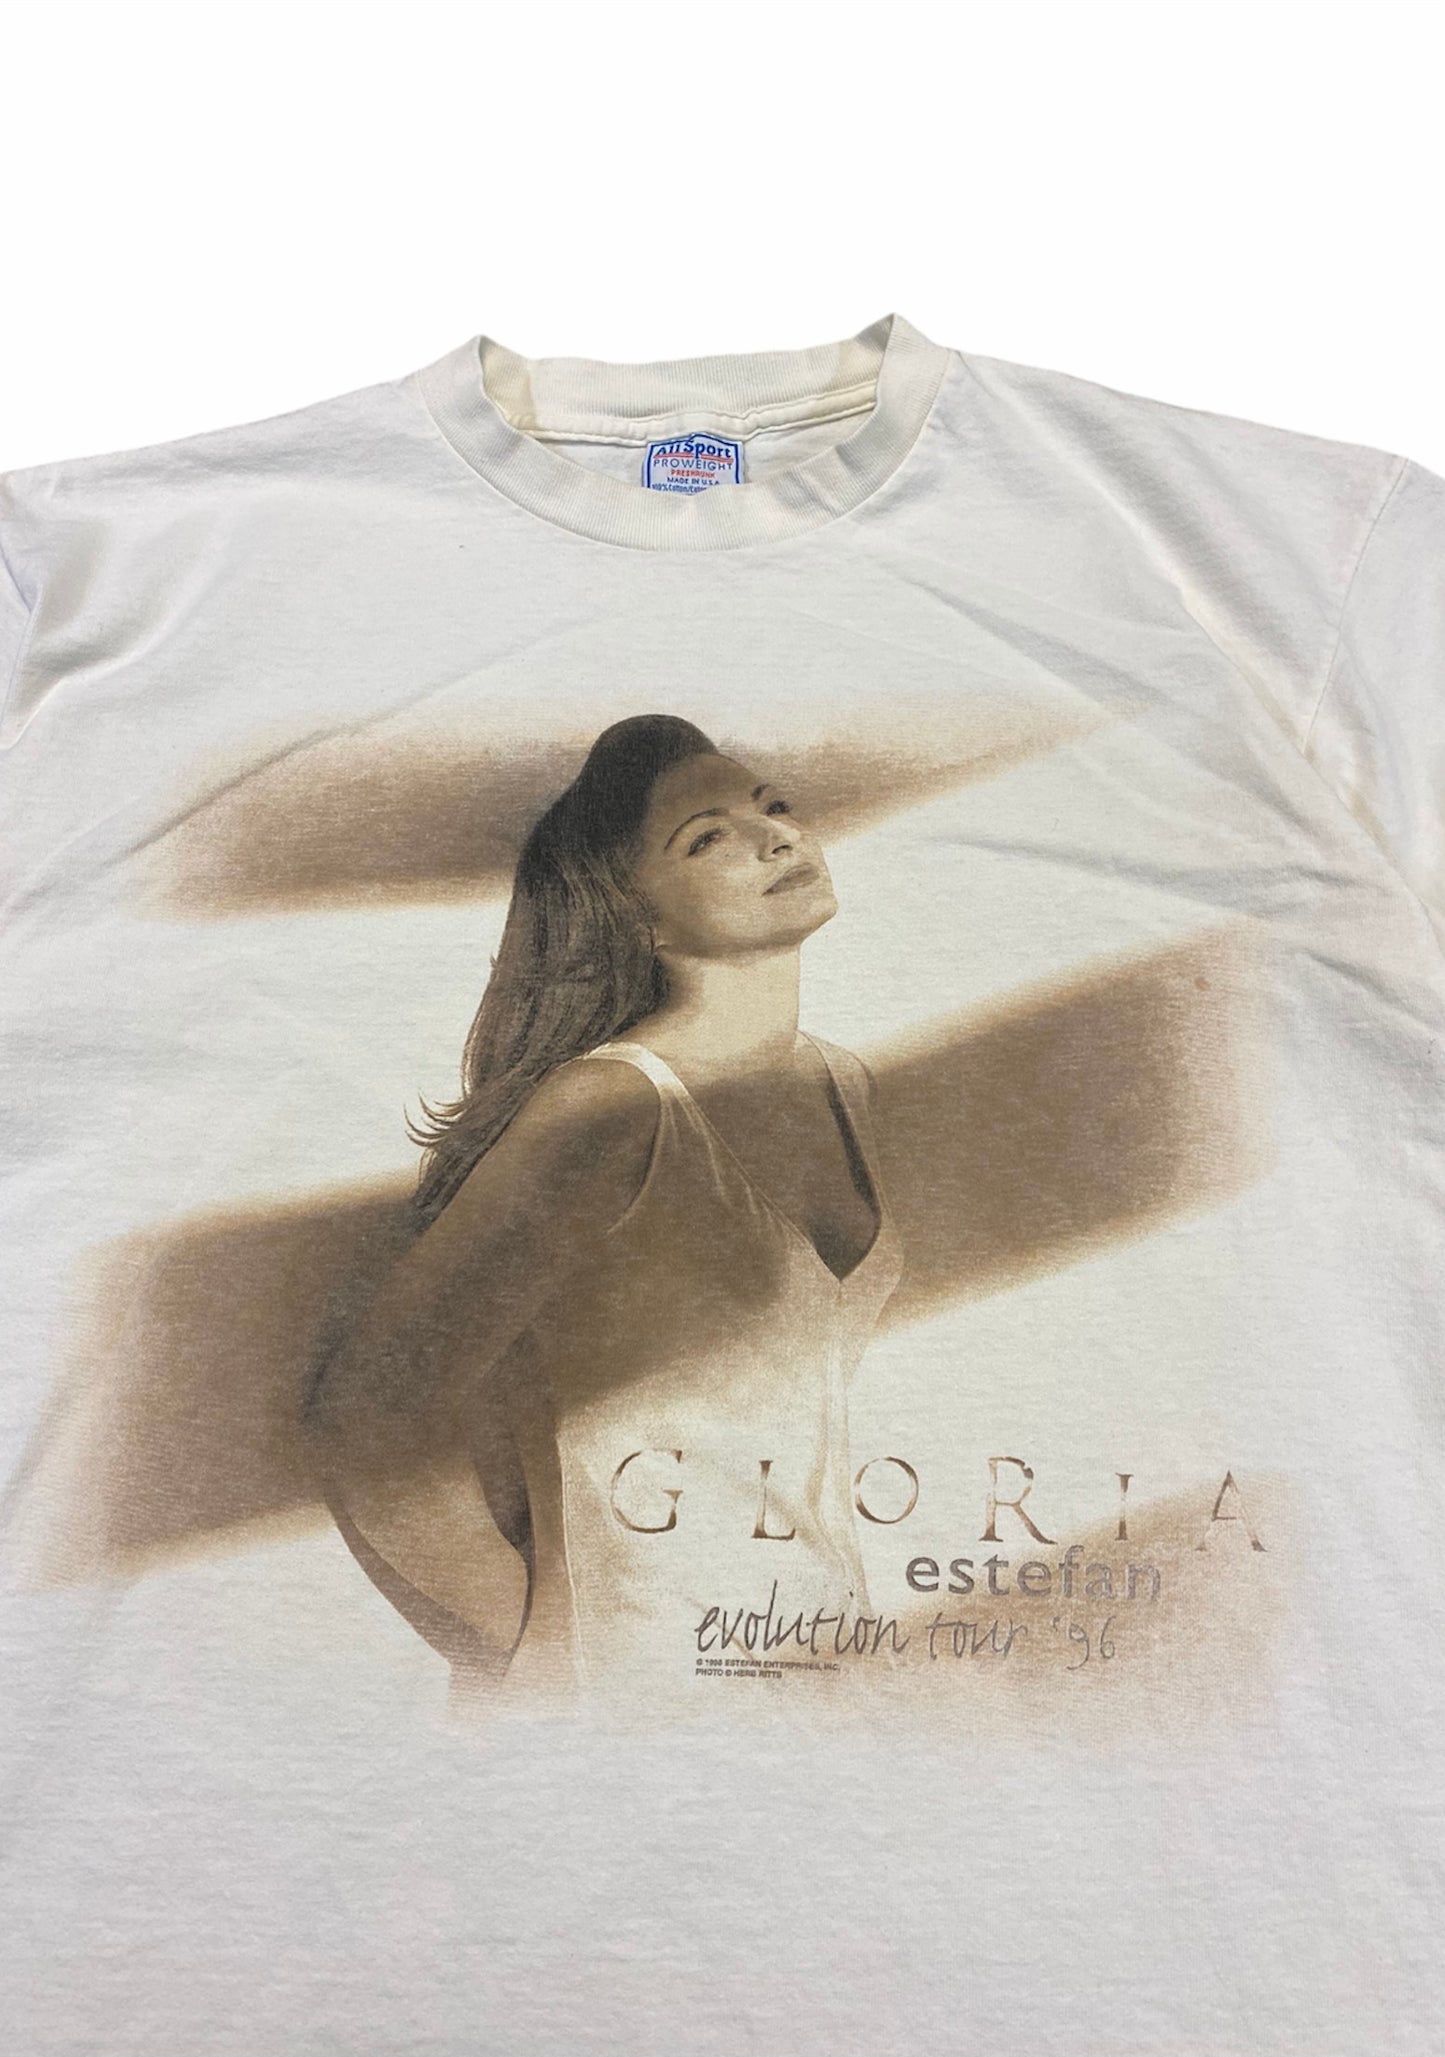 1996 Evolution Tour Gloria Estefan All Sport T-Shirt